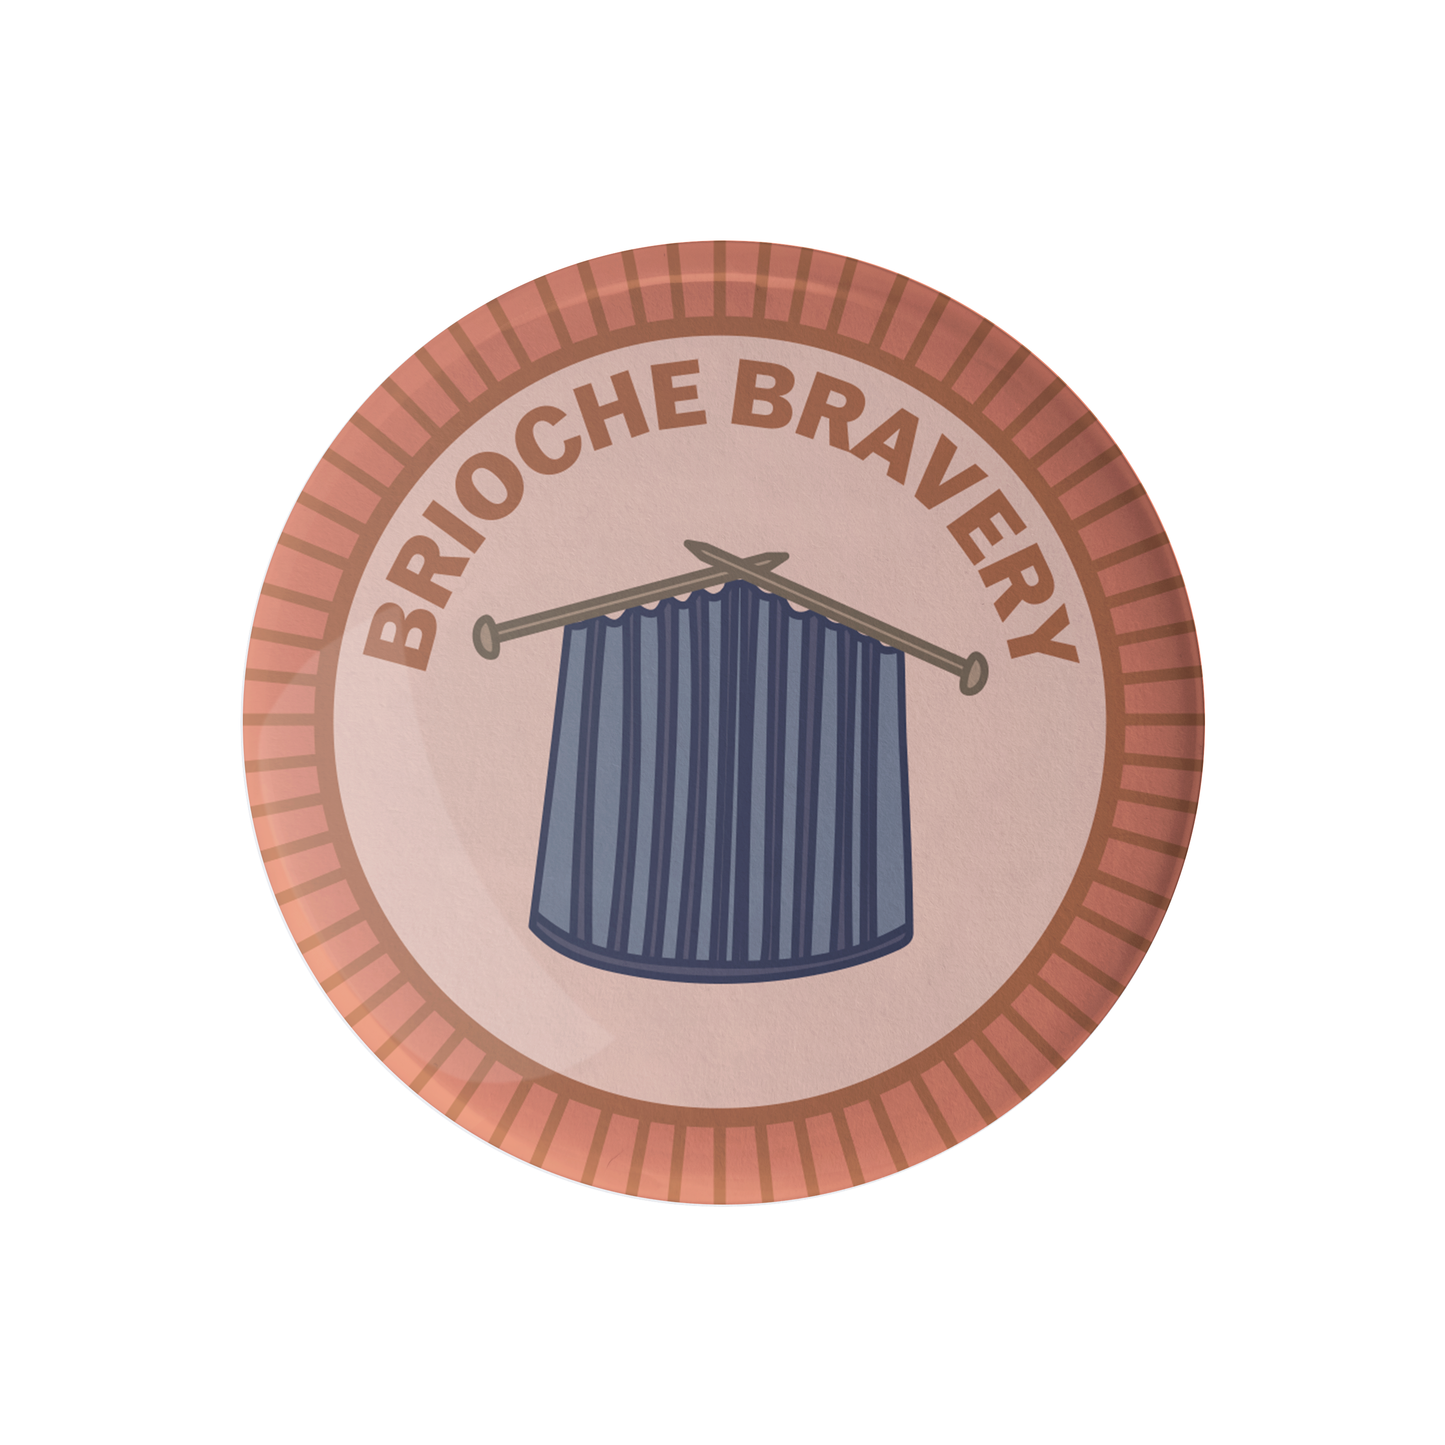 Brioche Bravery Knitting Merit Badge